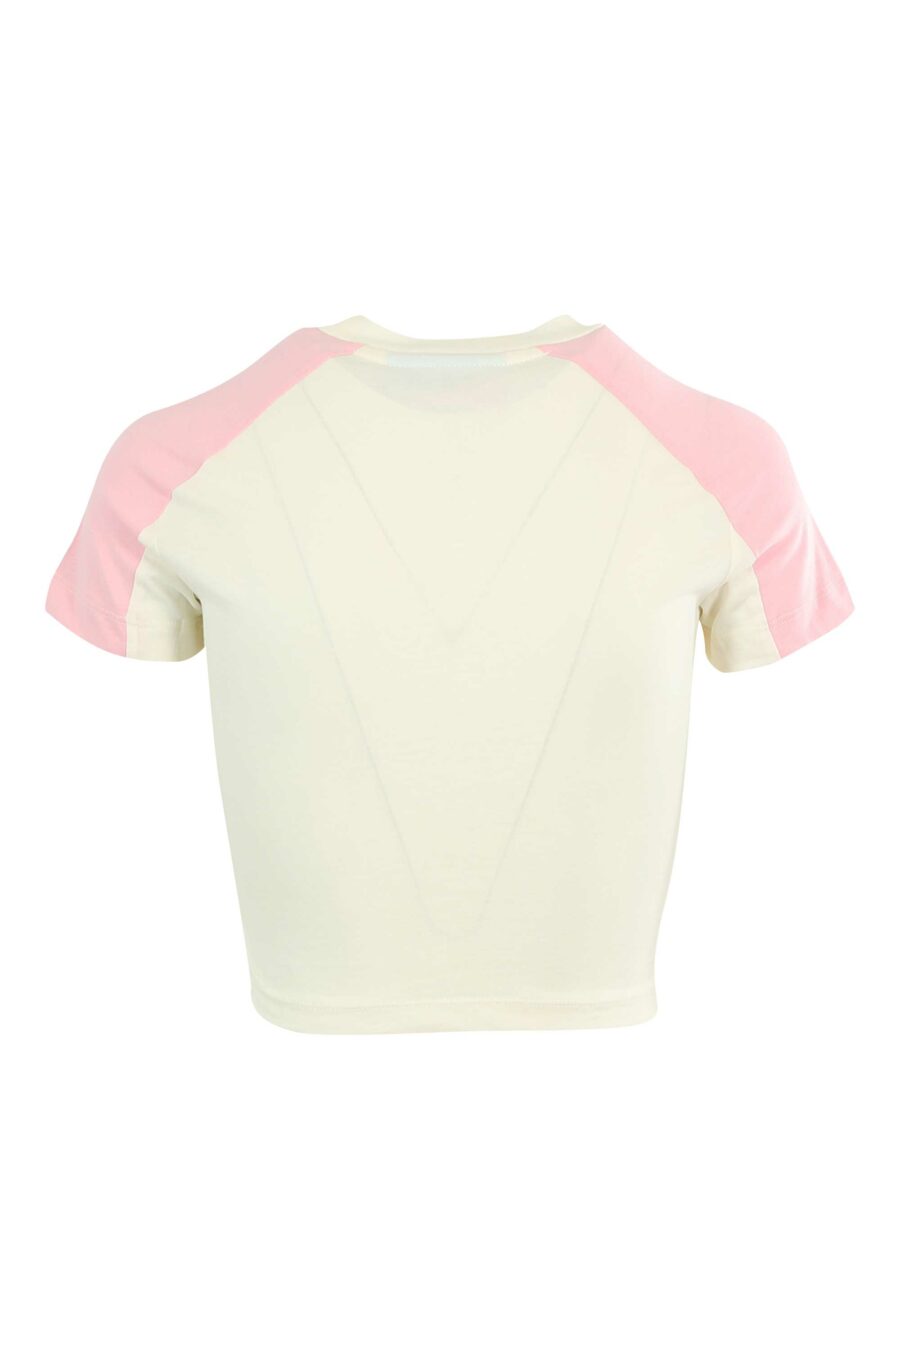 Camiseta blanca con minilogo rosa "ferragni" - 8052672415974 2